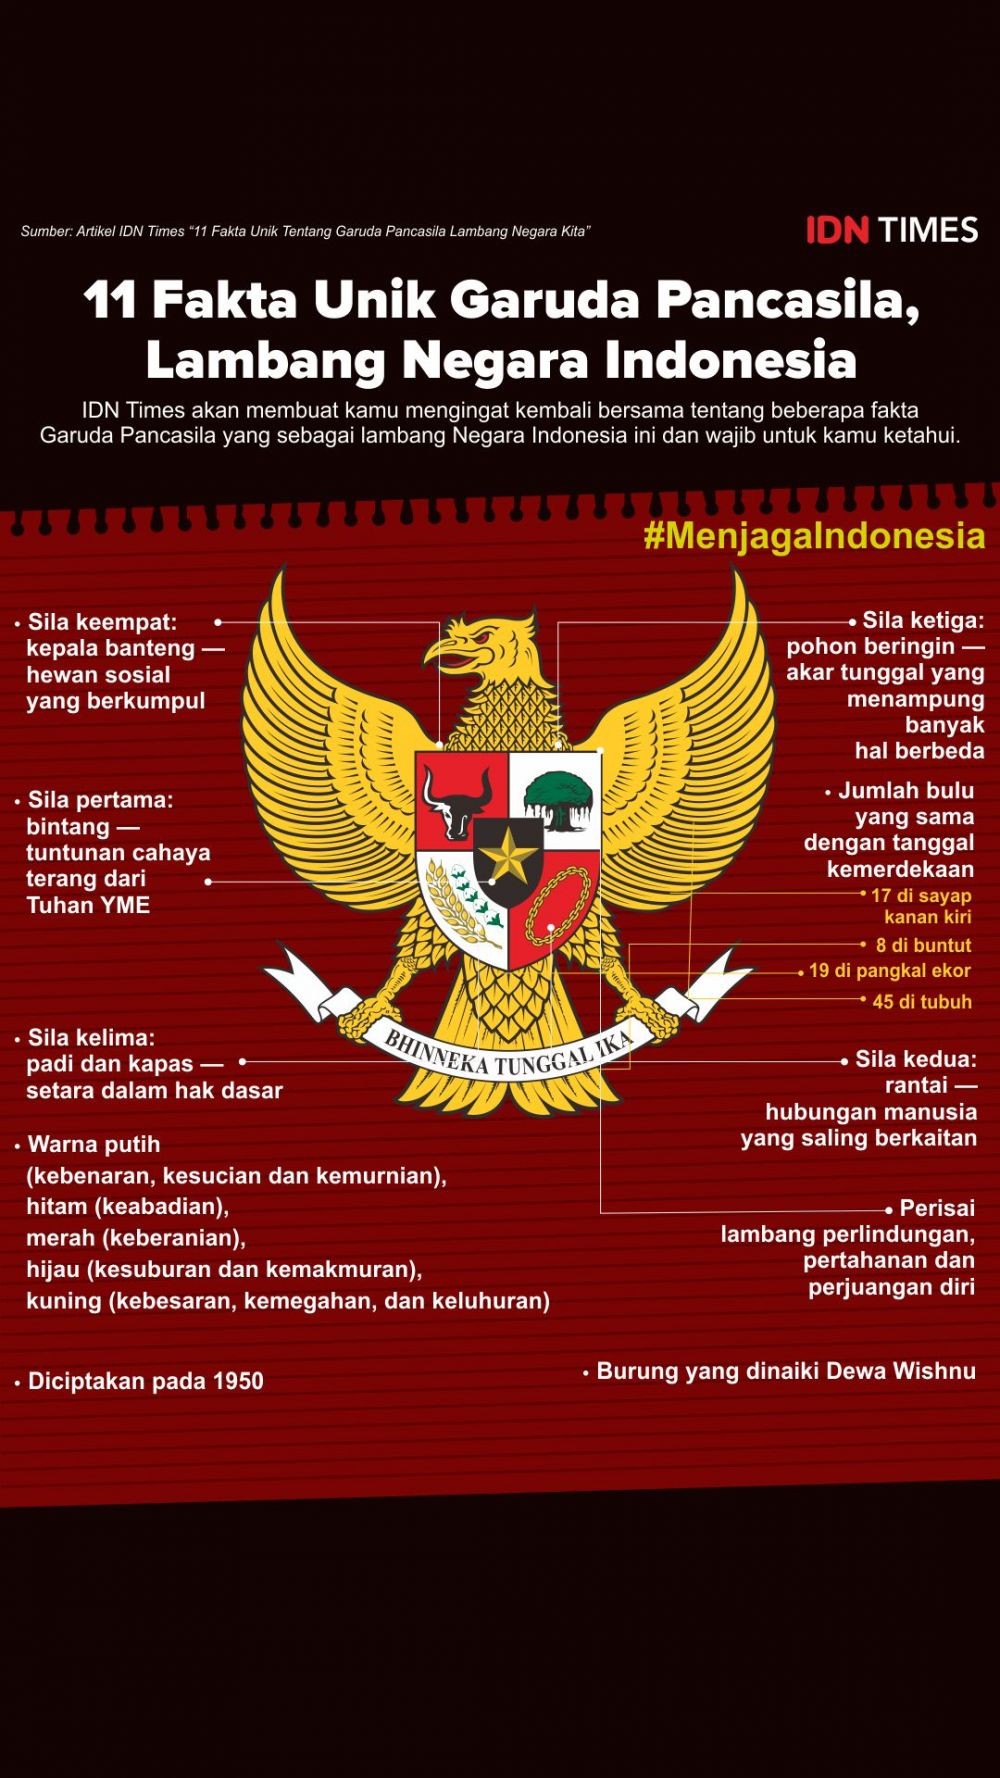 11 Fakta Sejarah Garuda Pancasila Lambang Negara Indonesia